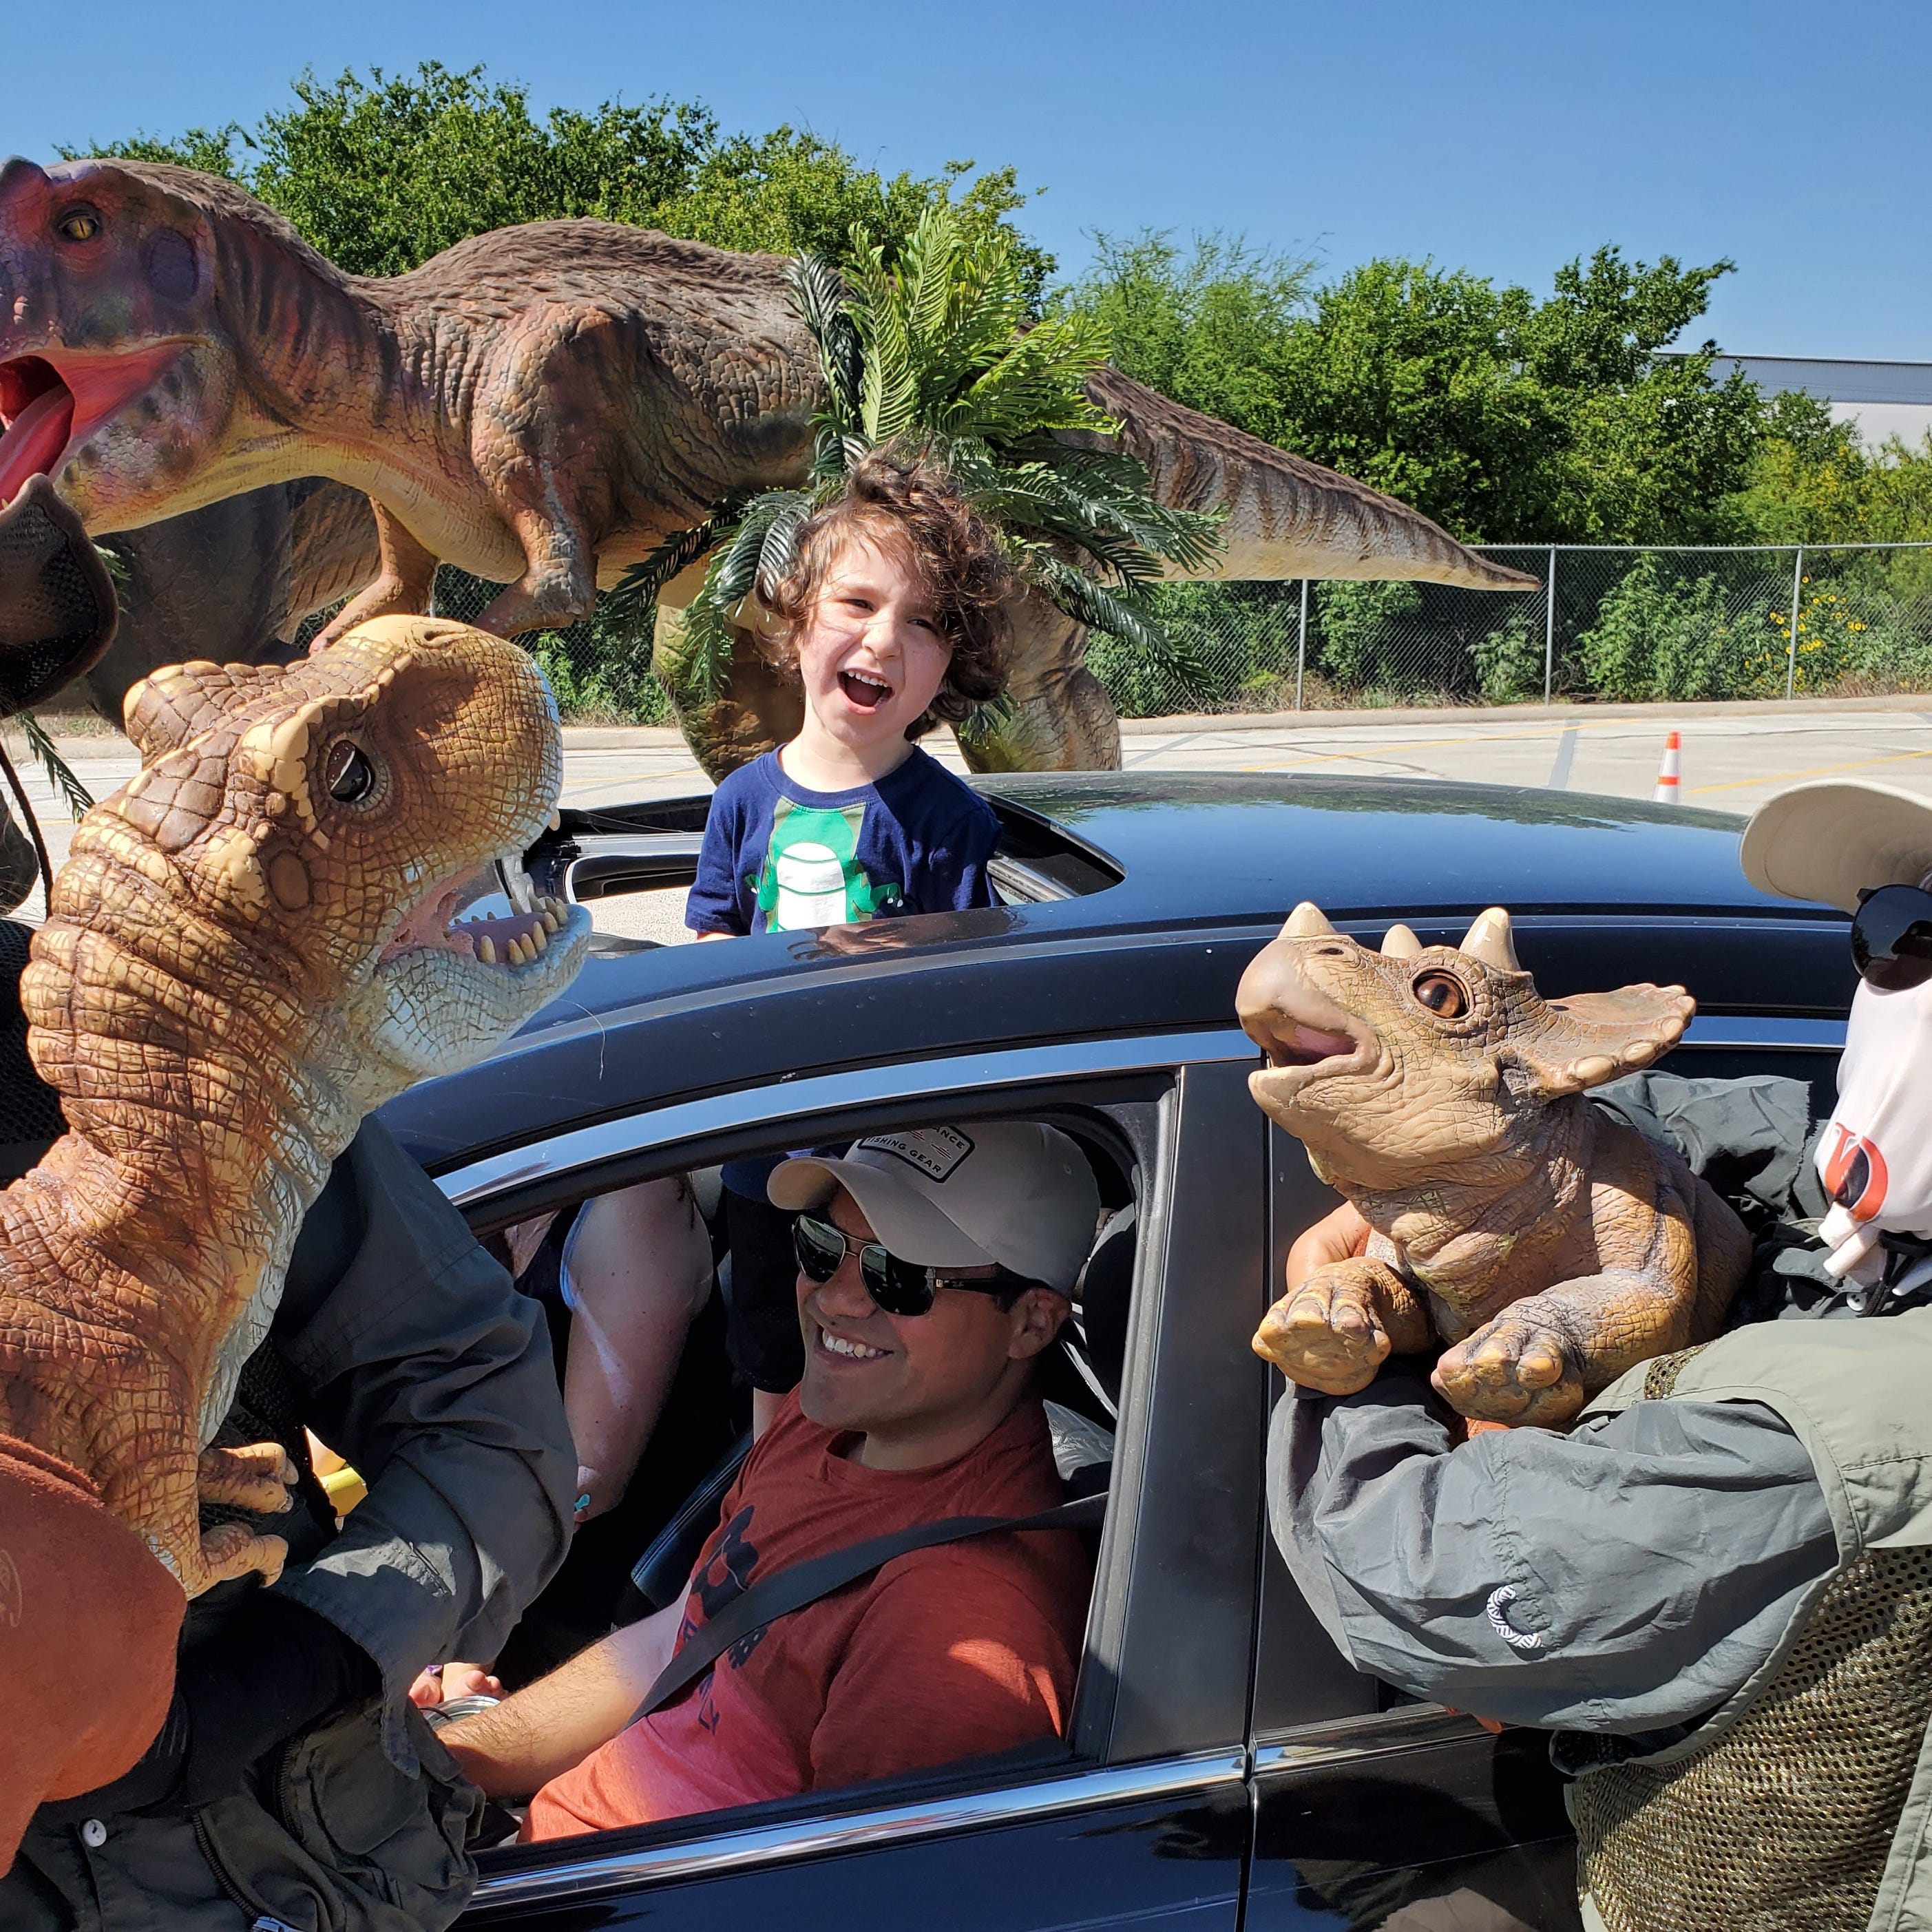 Jurassic Quest drive-thru dinosaur exhibit sets at DTE Energy Music Theatre's parking lot Friday through Aug. 23.